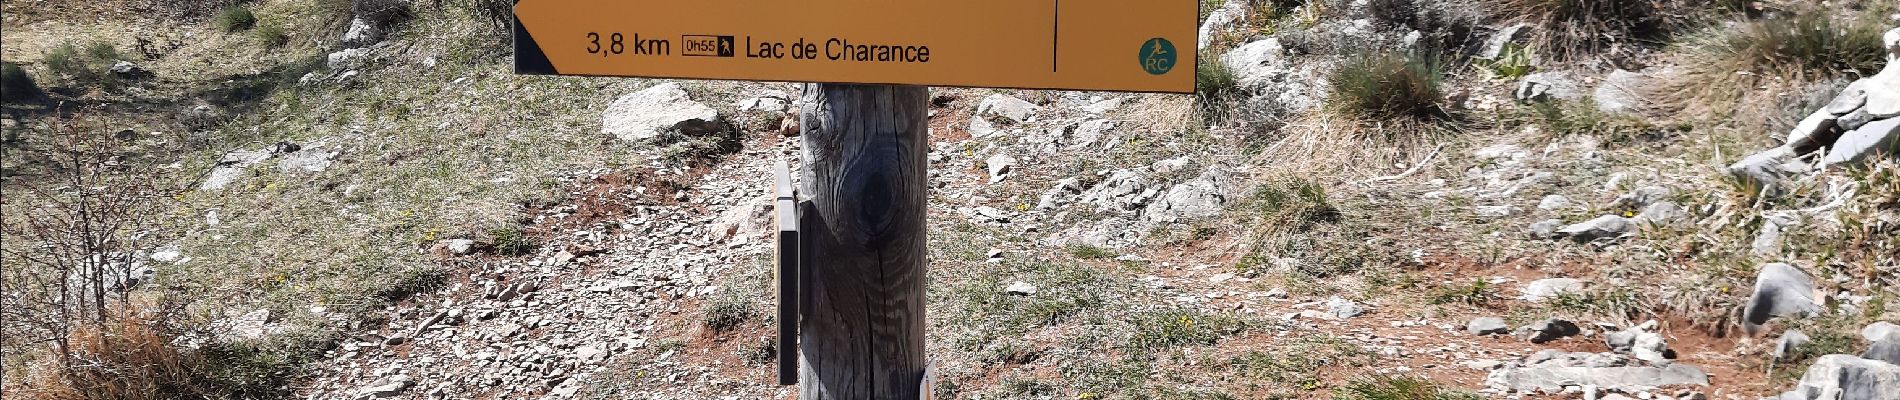 Tour Wandern Gap - cretes de charance - Photo